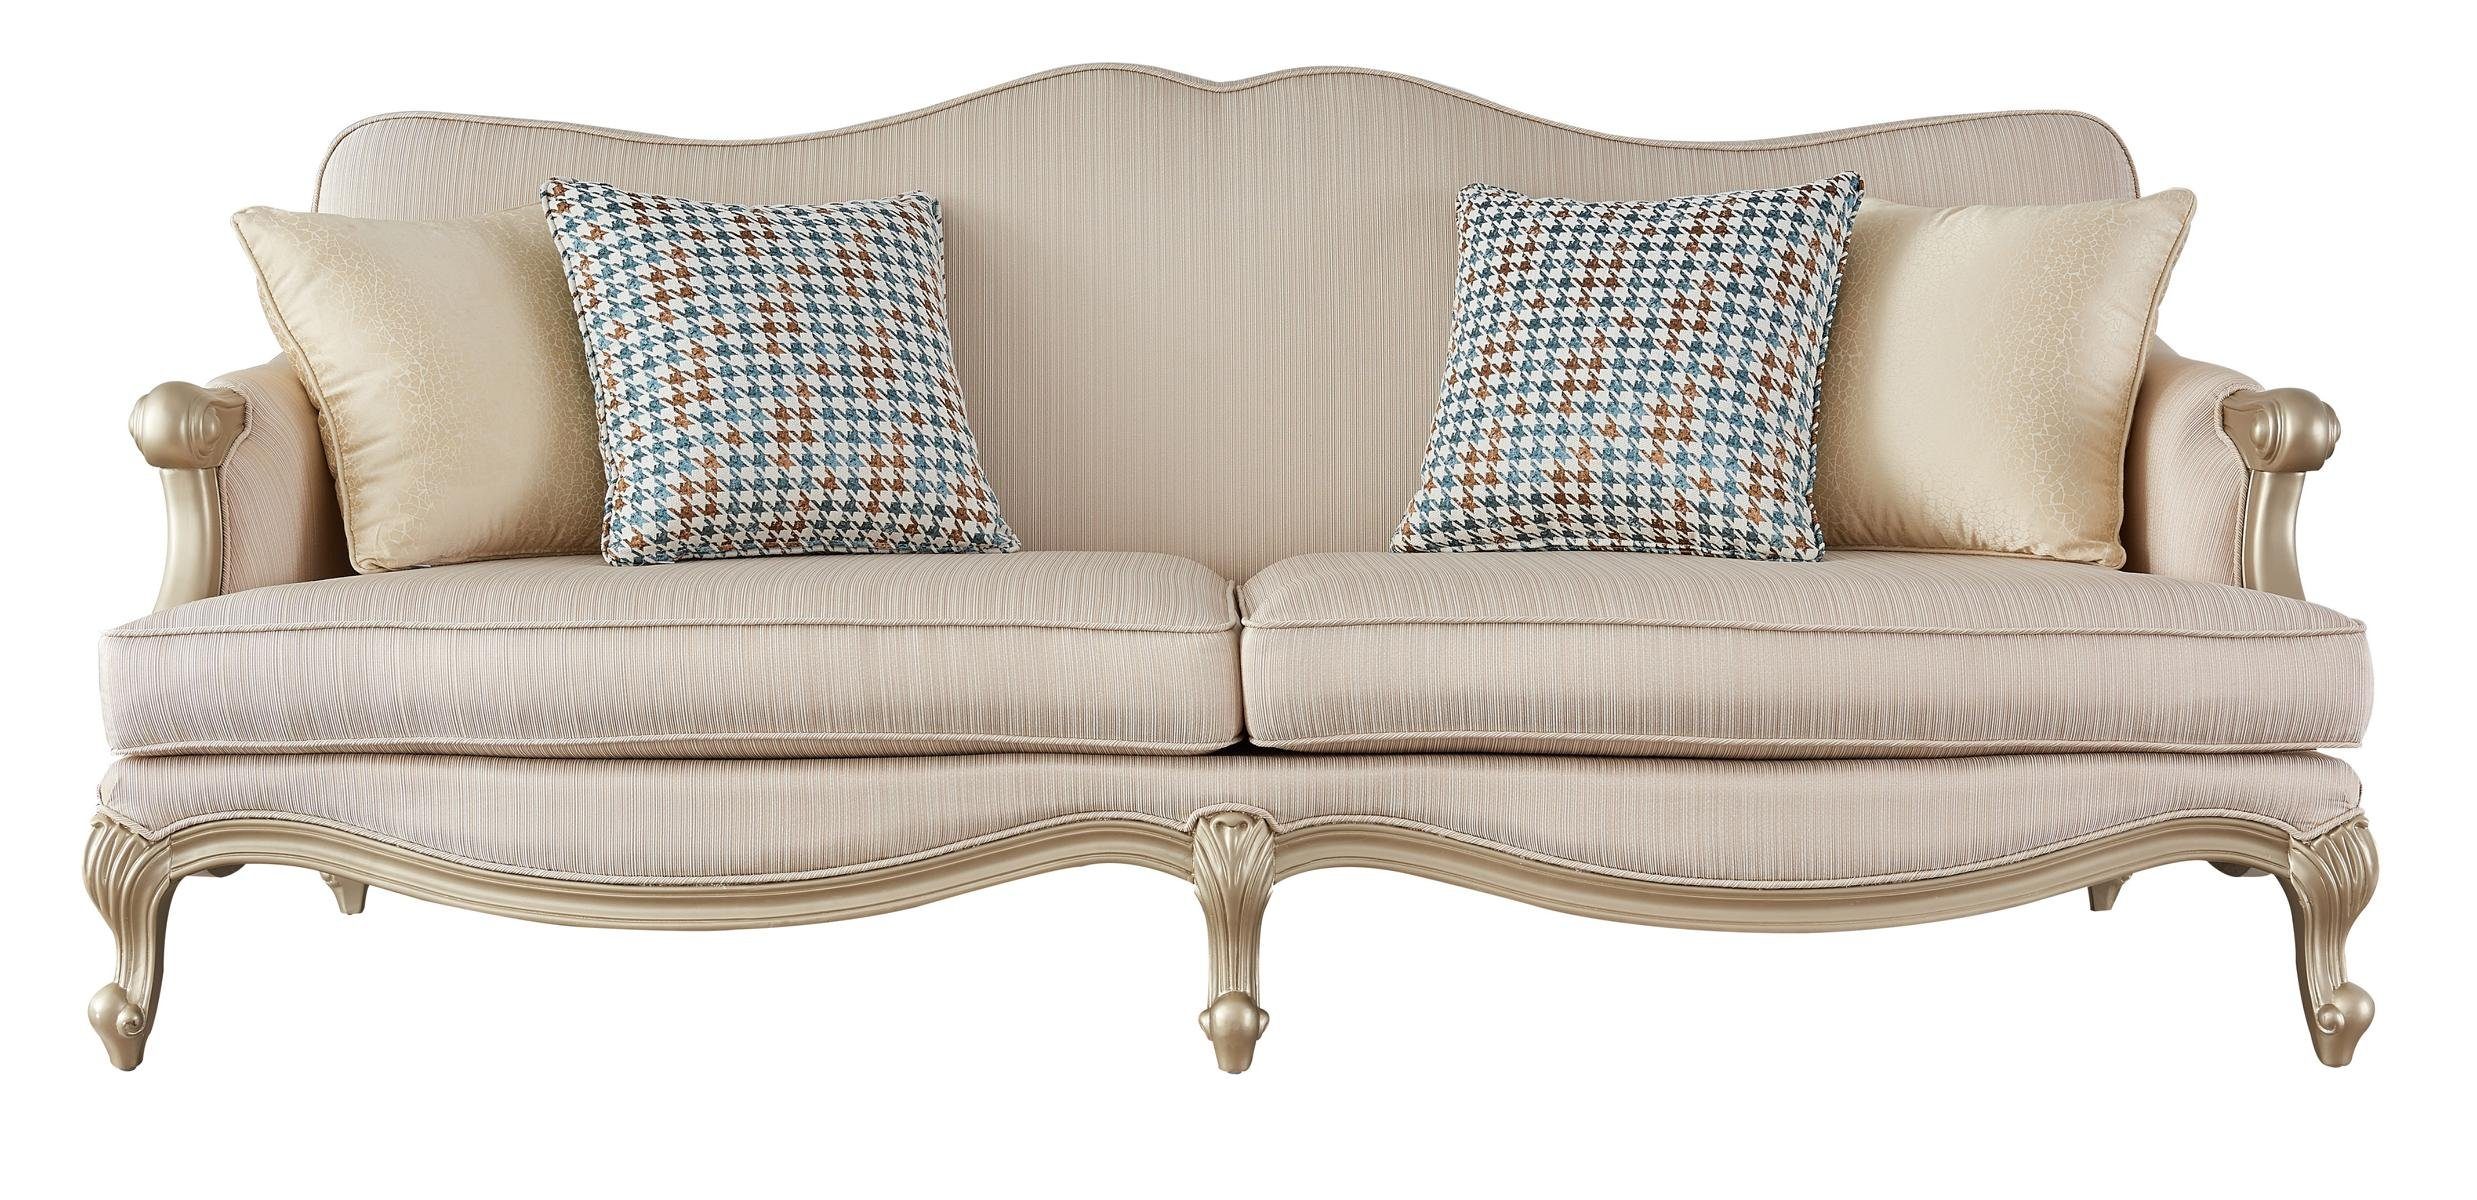 JVmoebel Sofa Designer Klassische Sofagarnitur 3+1 Sitzer Luxus Couchen Sessel Neu, Made in Europe